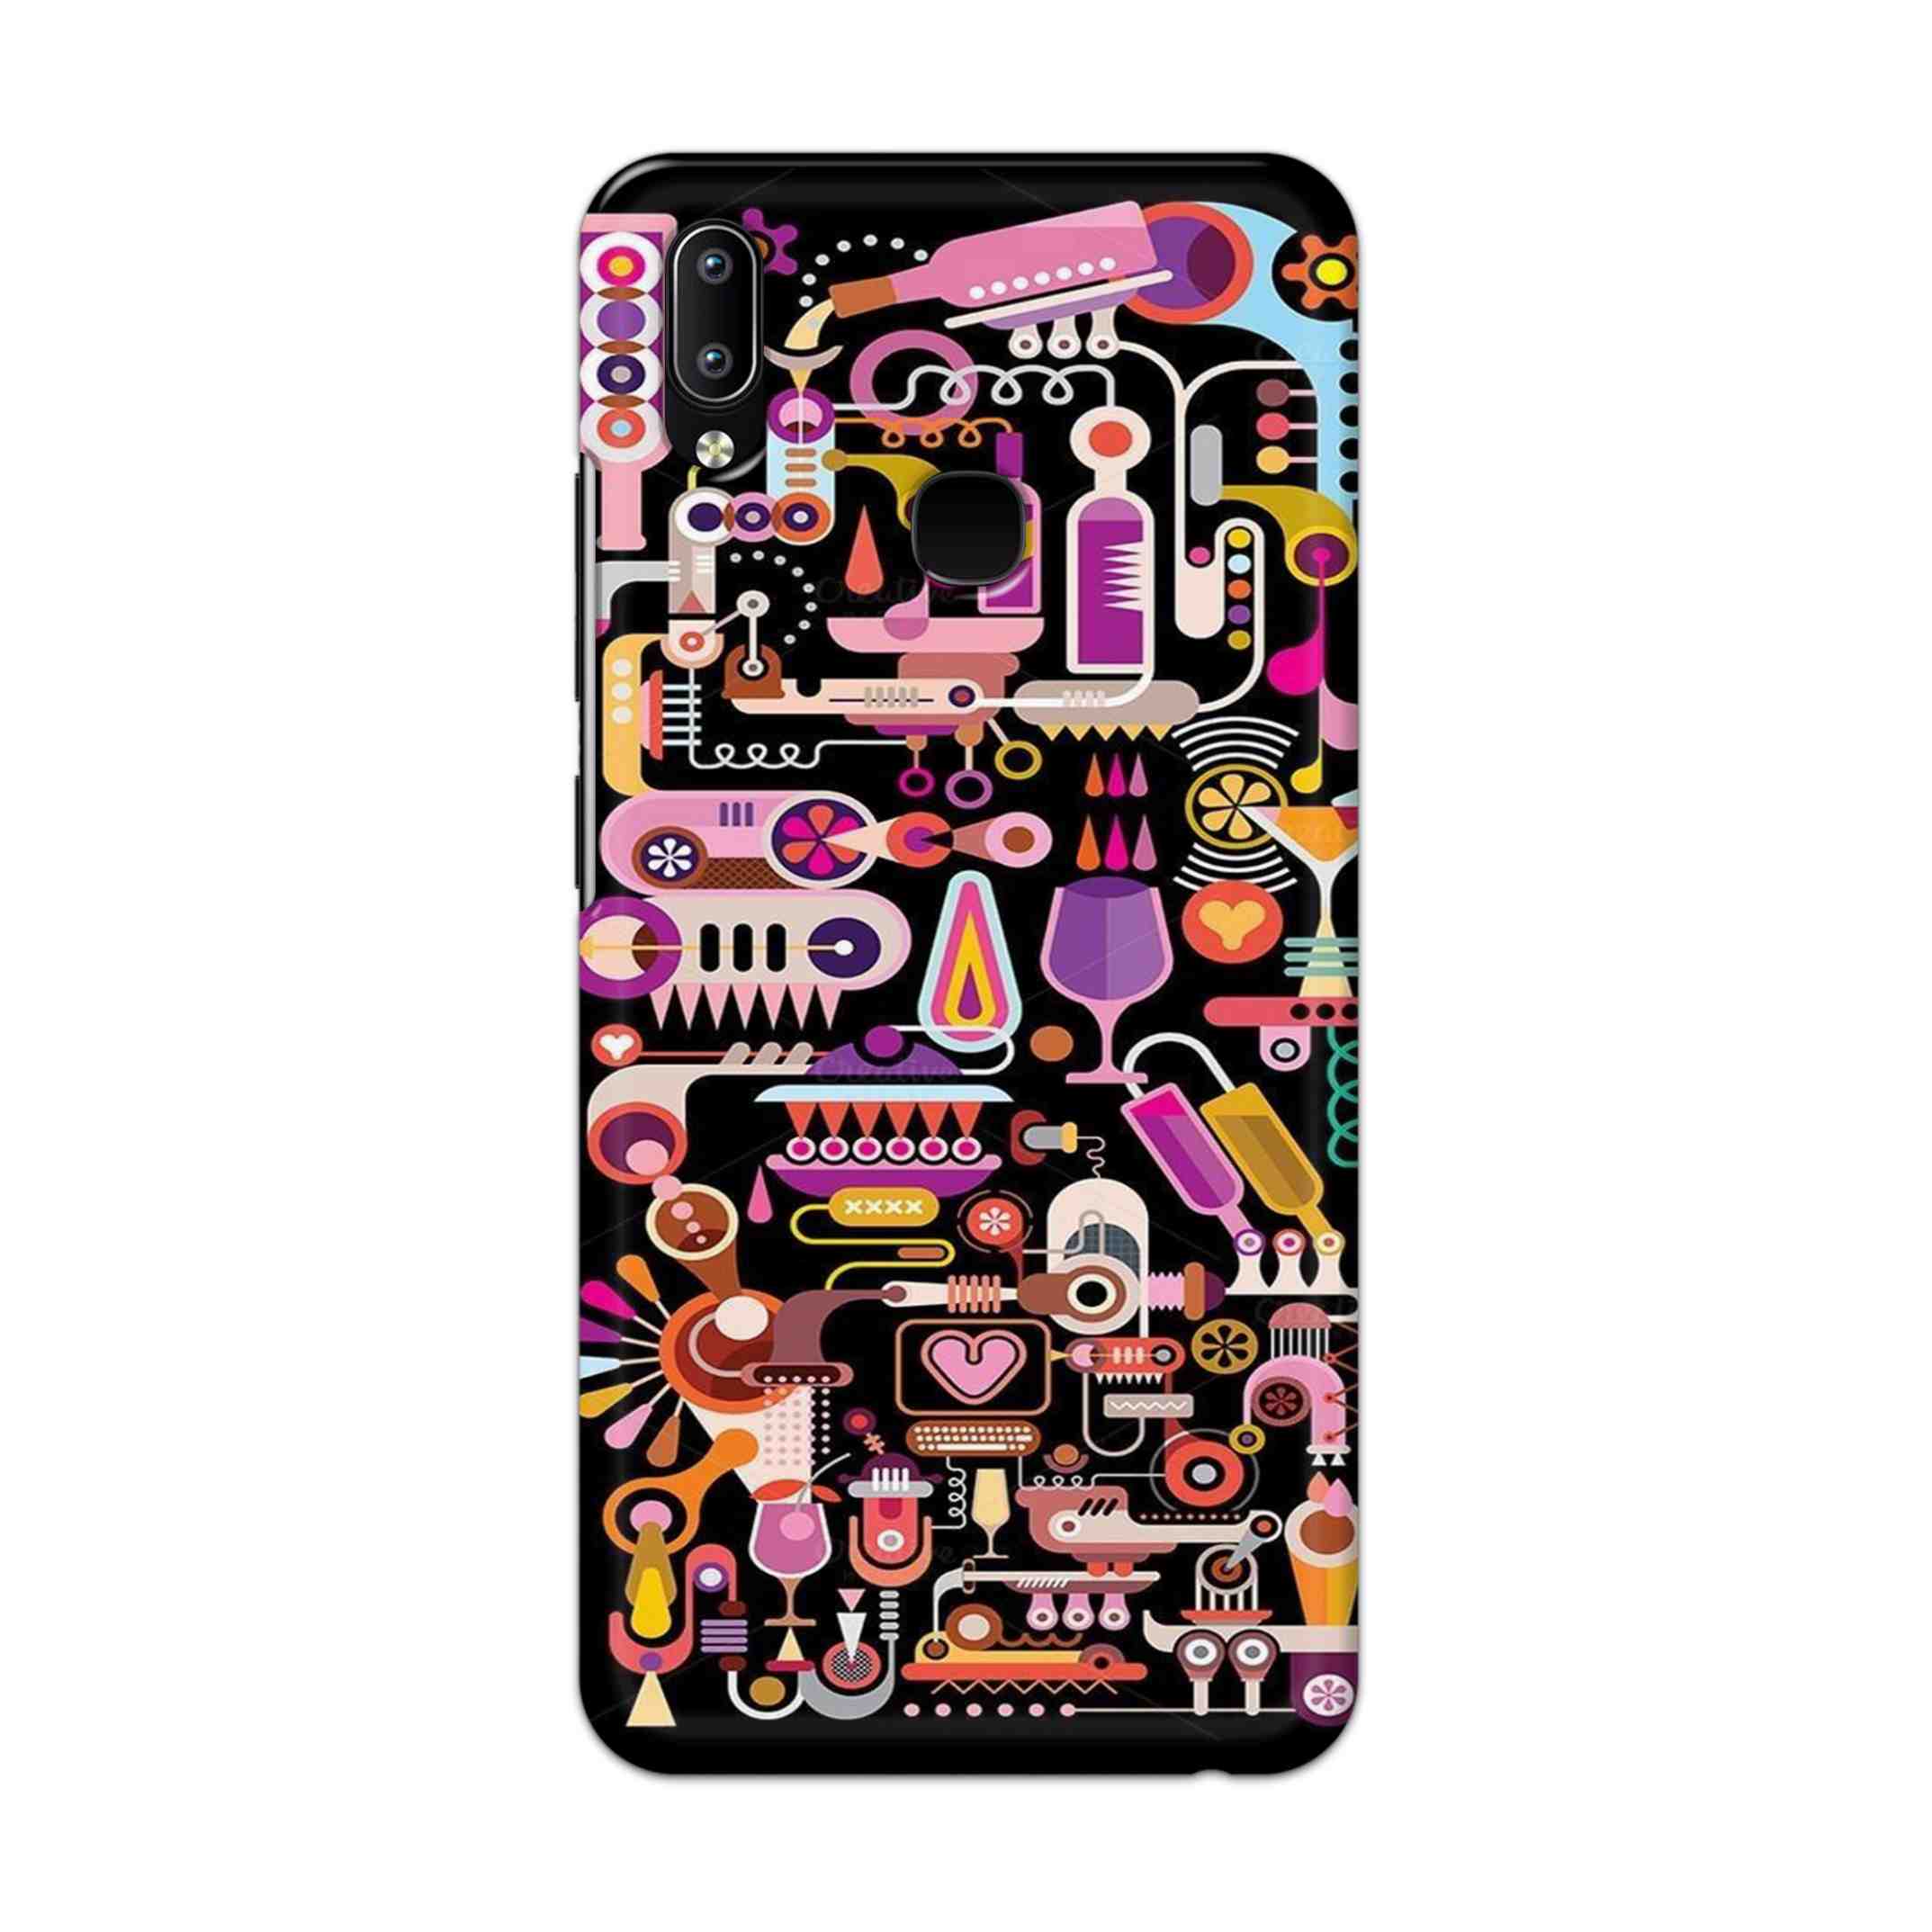 Buy Lab Art Hard Back Mobile Phone Case Cover For Vivo Y95 / Y93 / Y91 Online